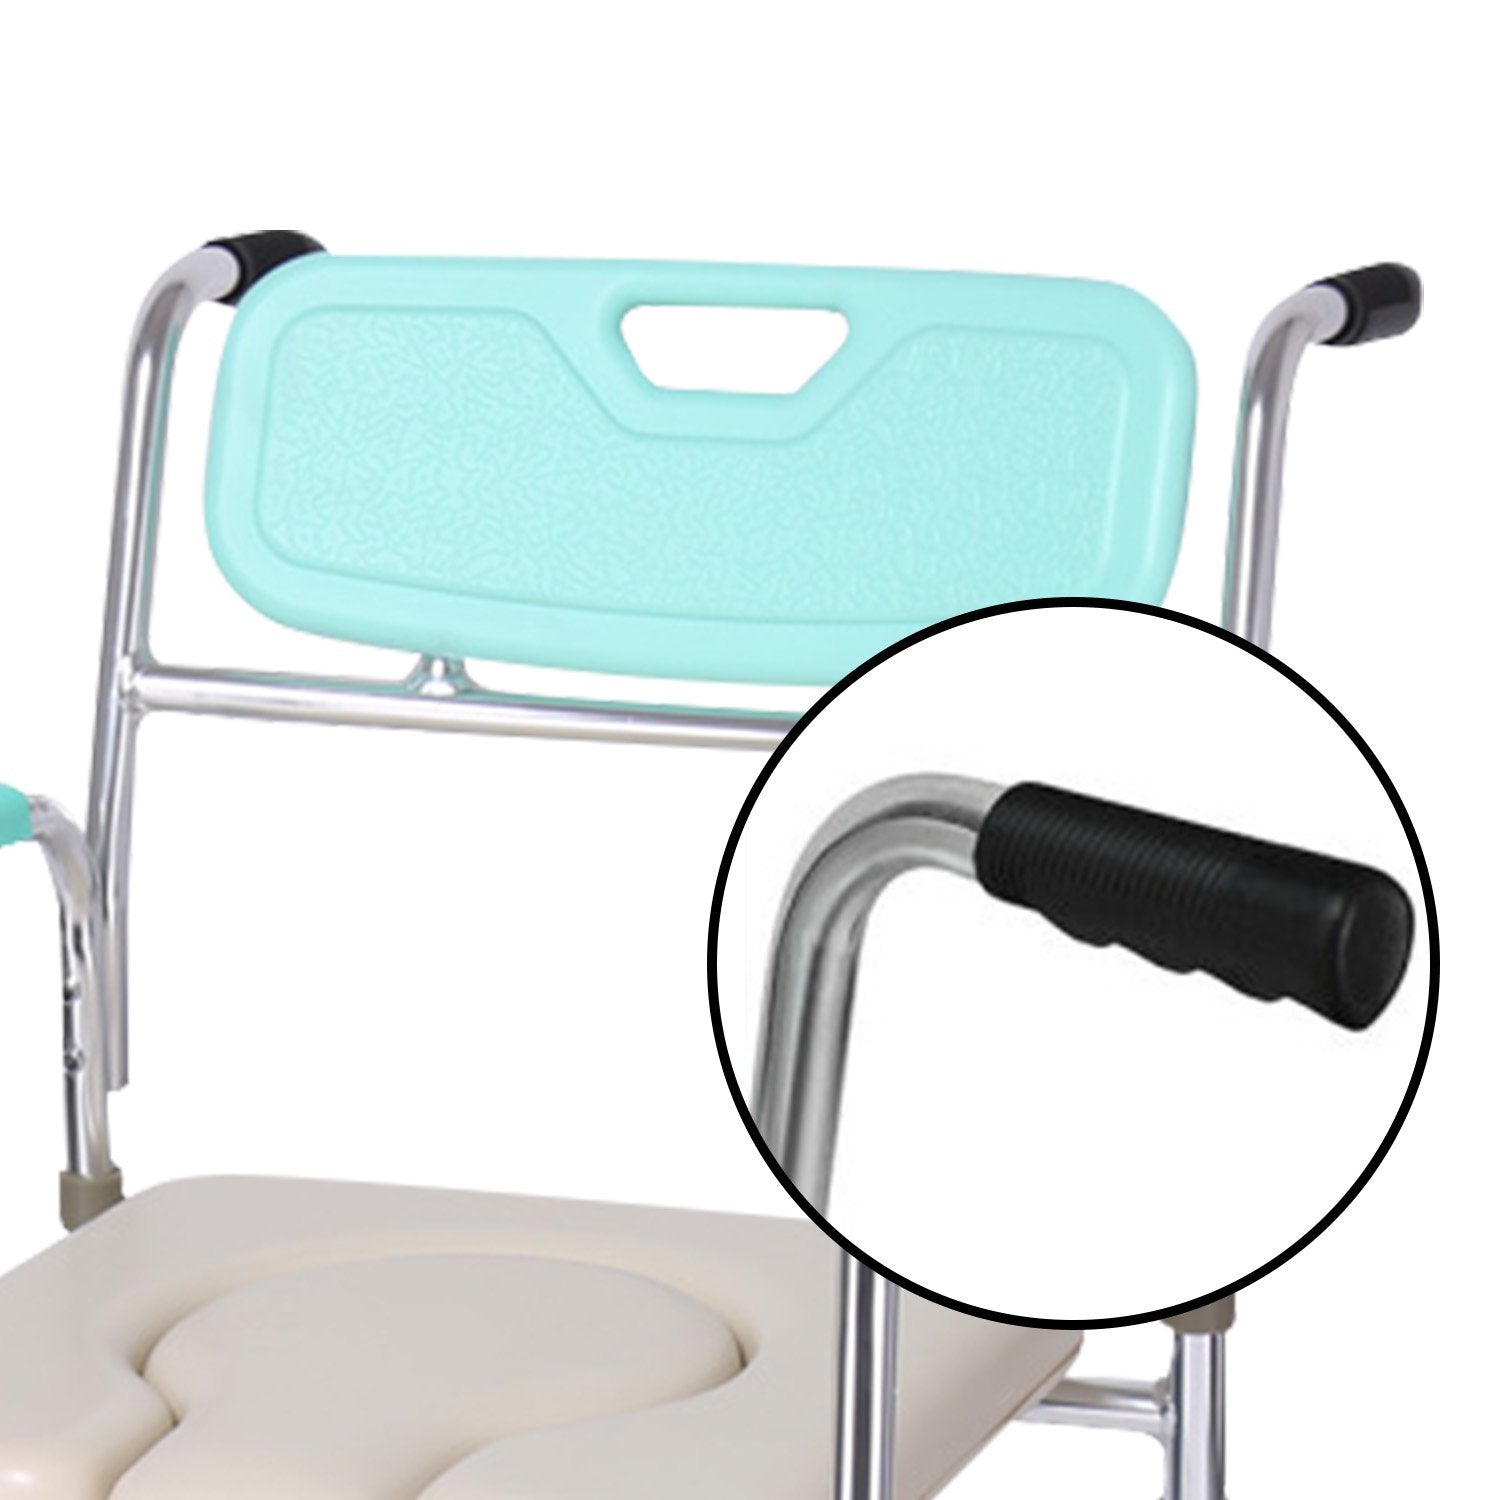 Commode Chair With Castors Aluminium Frame Footrest Soft Push Handles